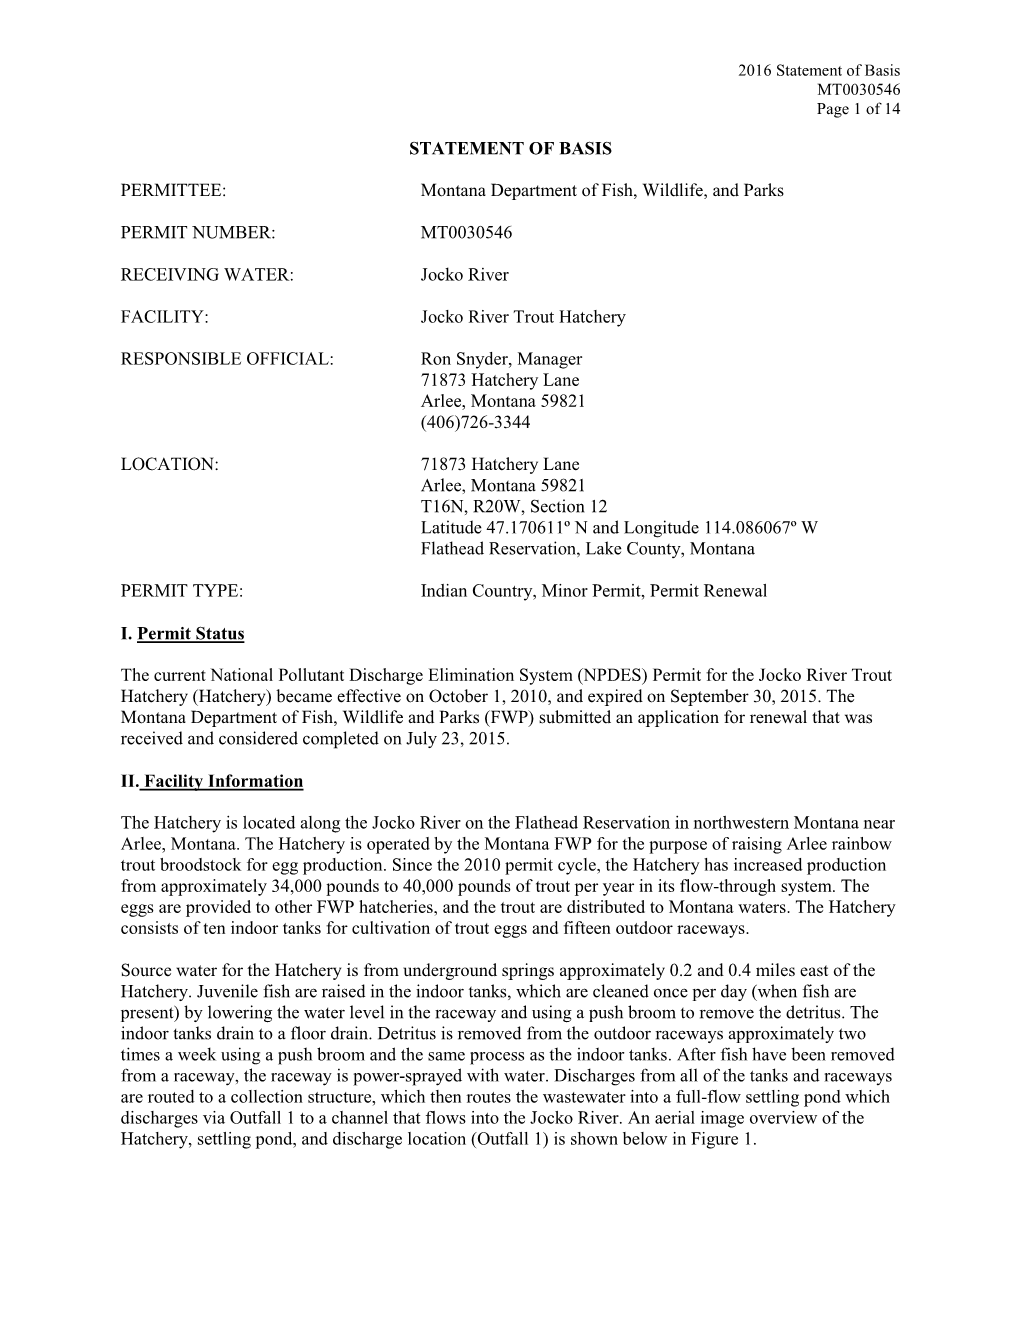 MT-0030546 Jocko River Trout Hatchery Final NPDES Statement of Basis